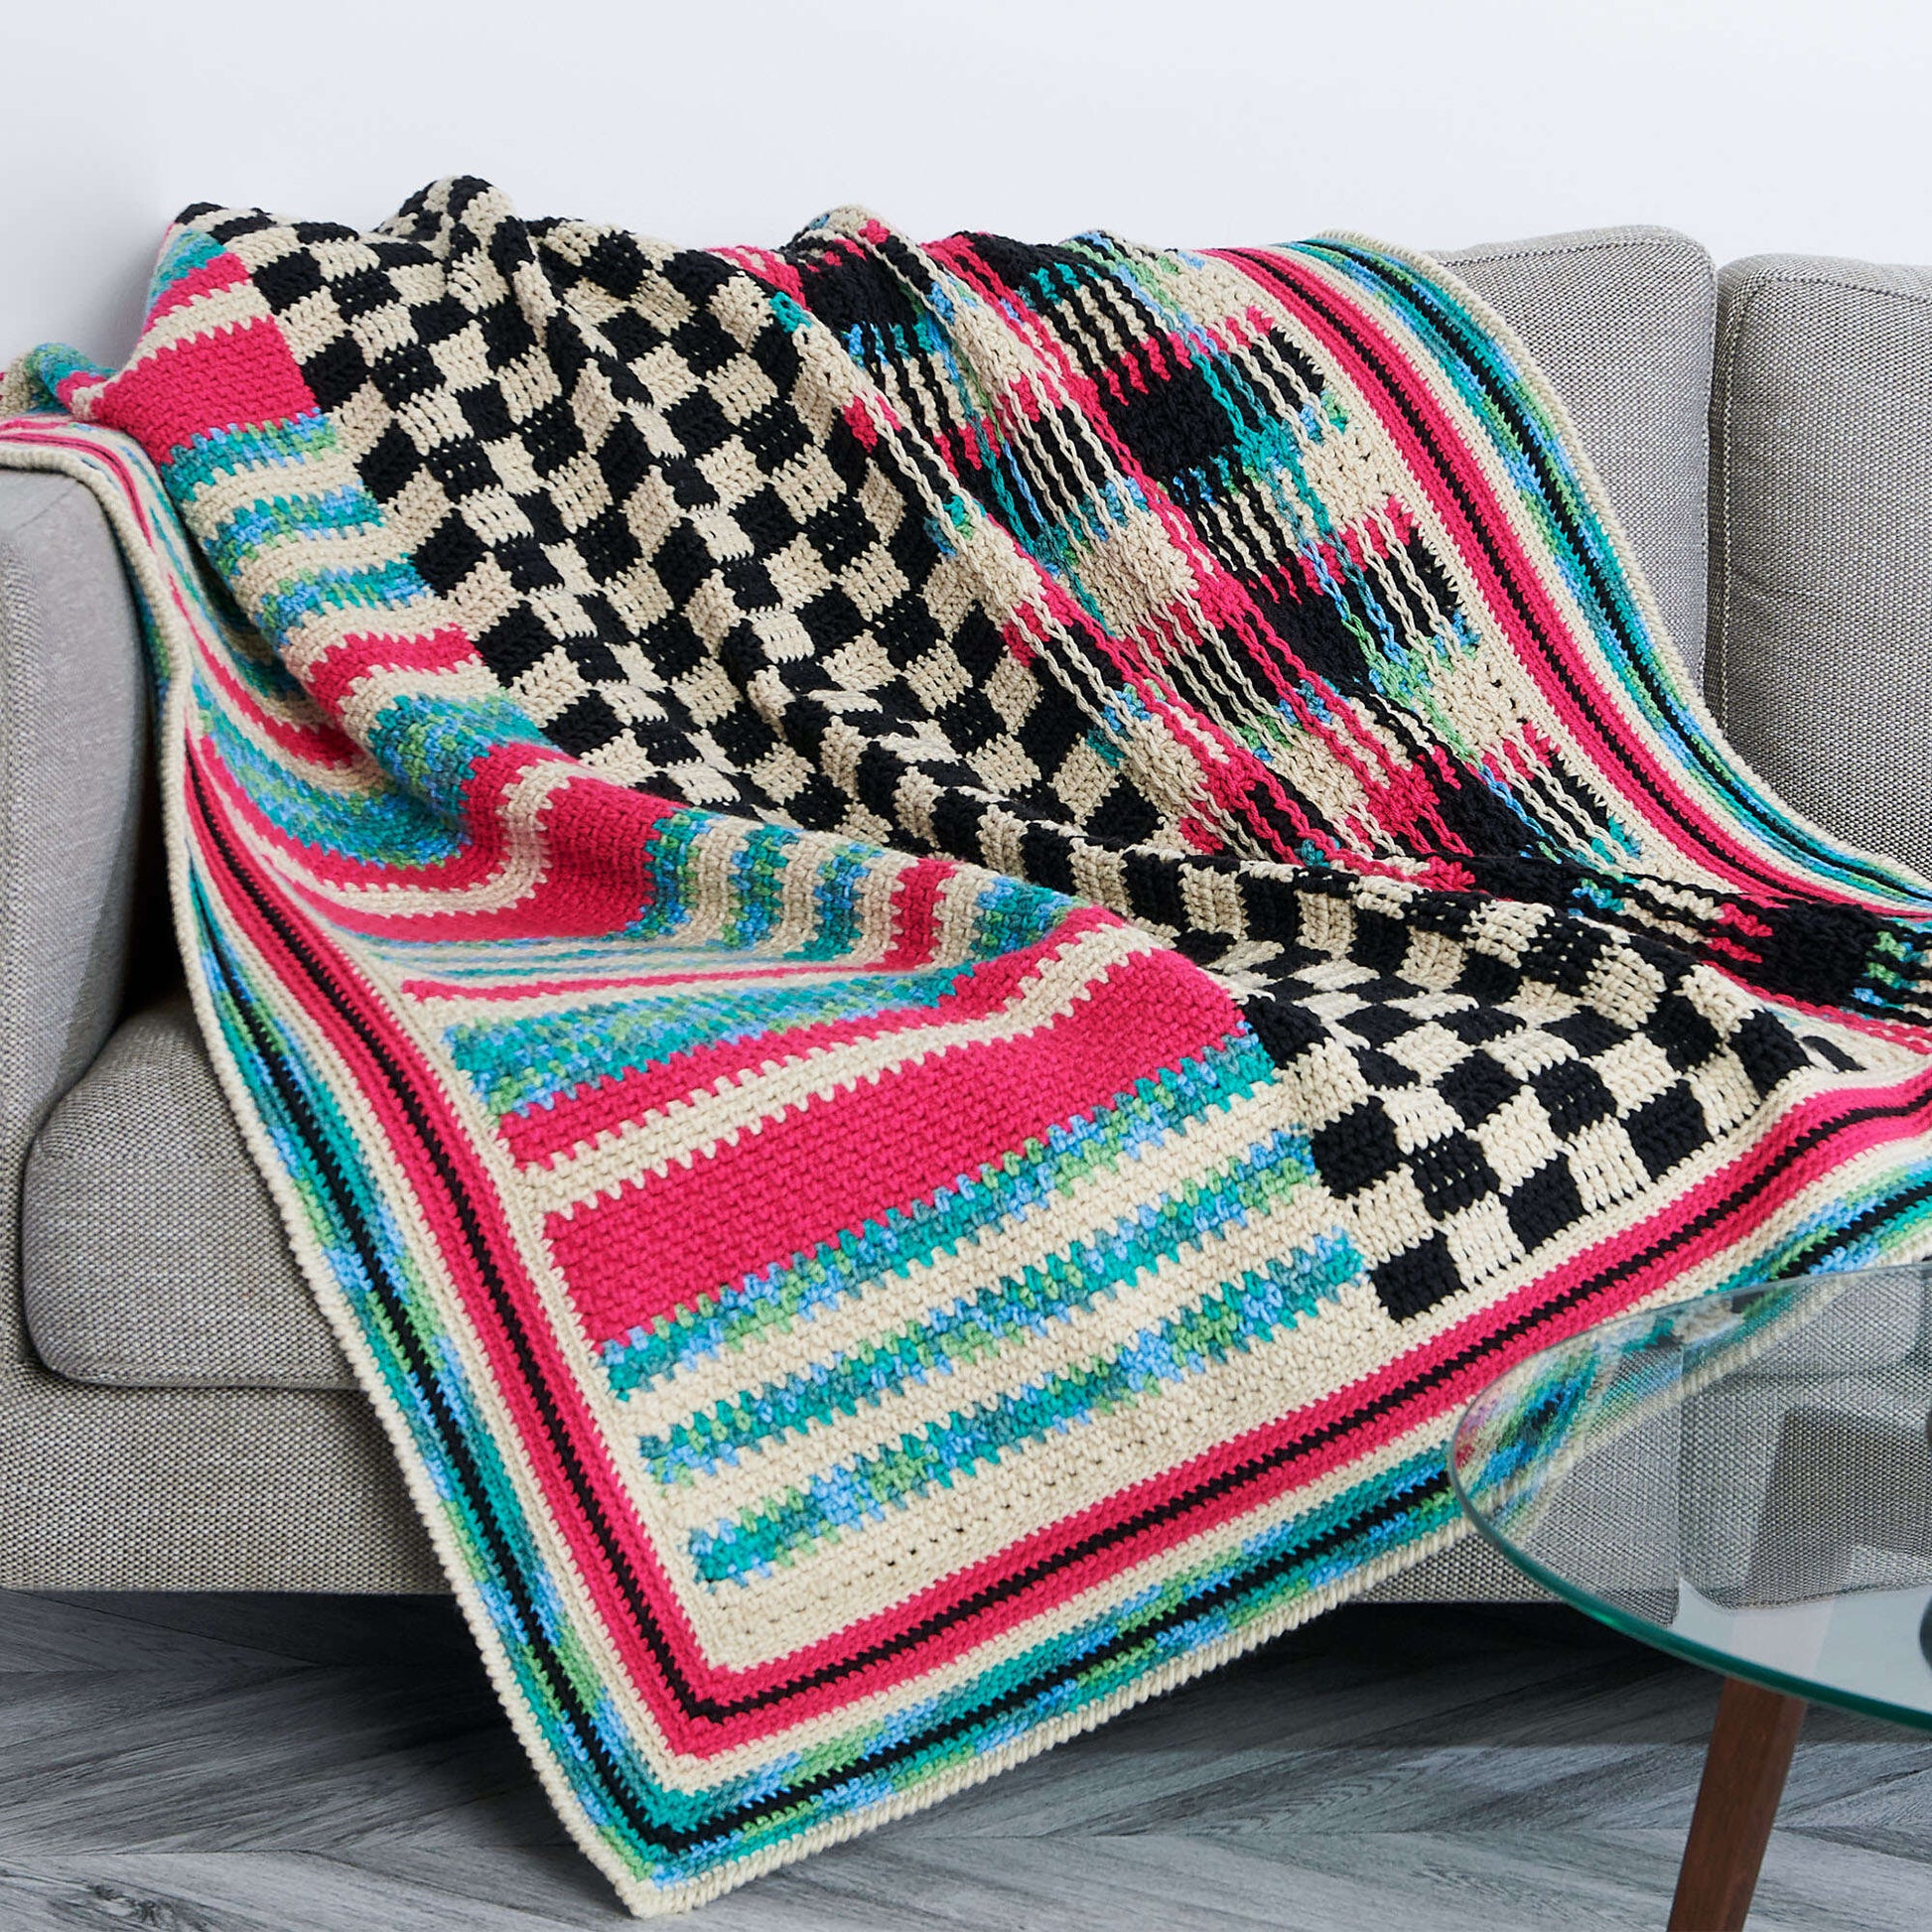 Free Caron Check Please Panel Crochet Blanket Pattern